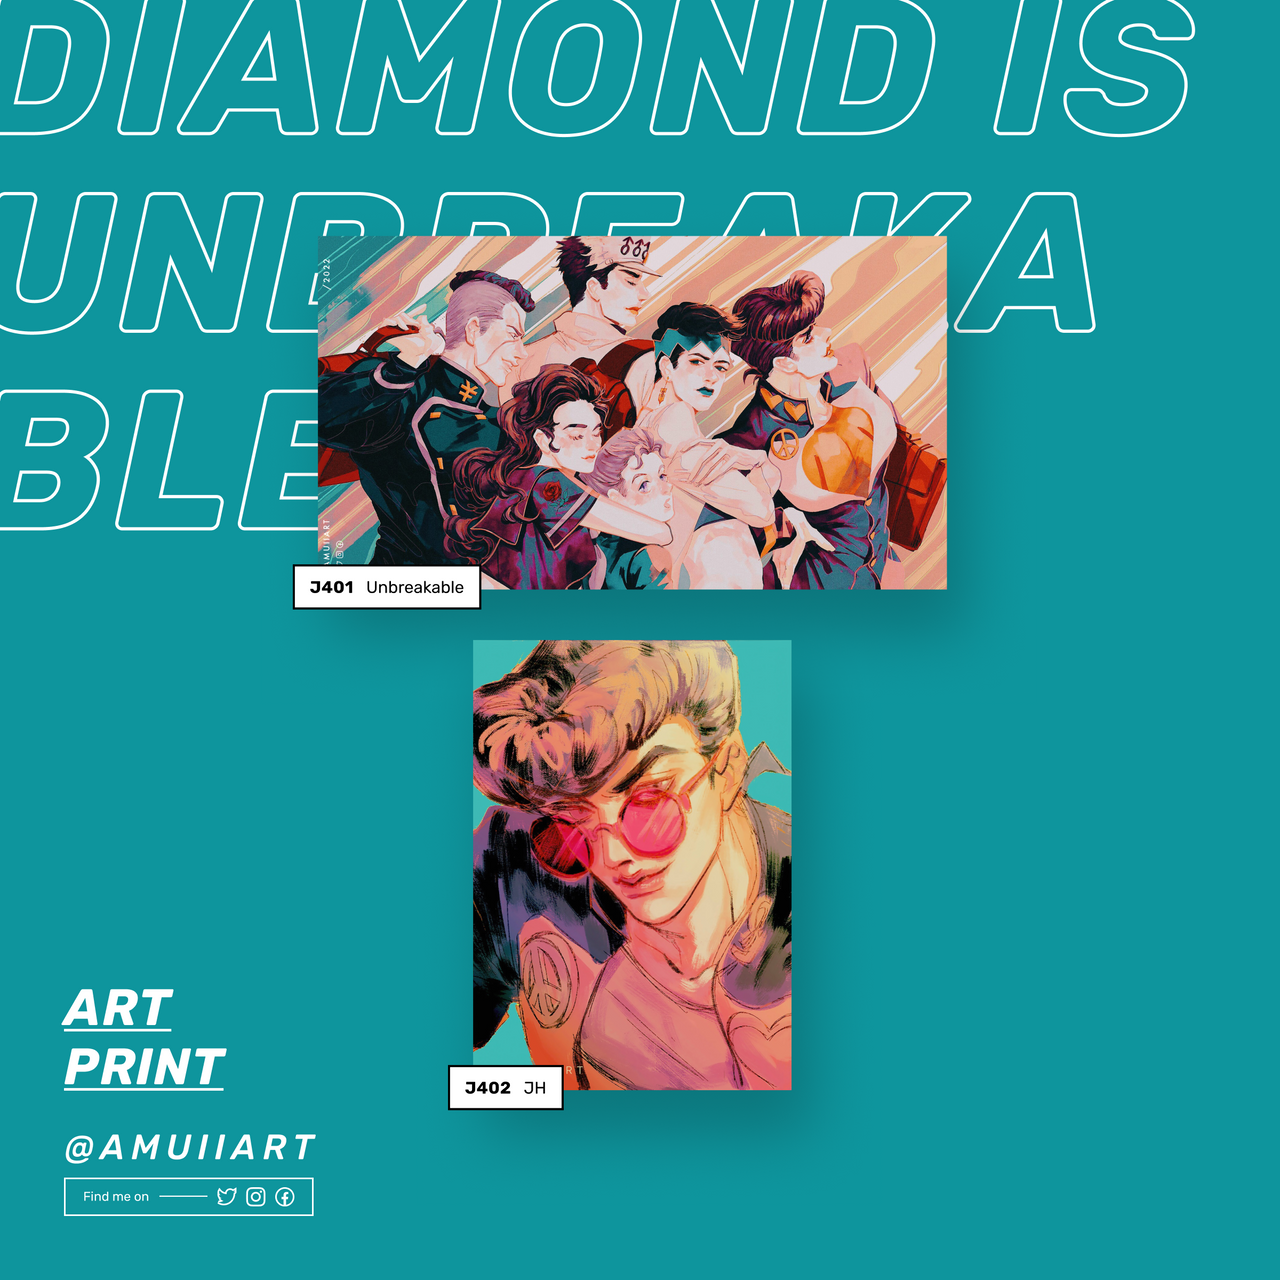 Part 4. Diamond Is Unbreakable art print